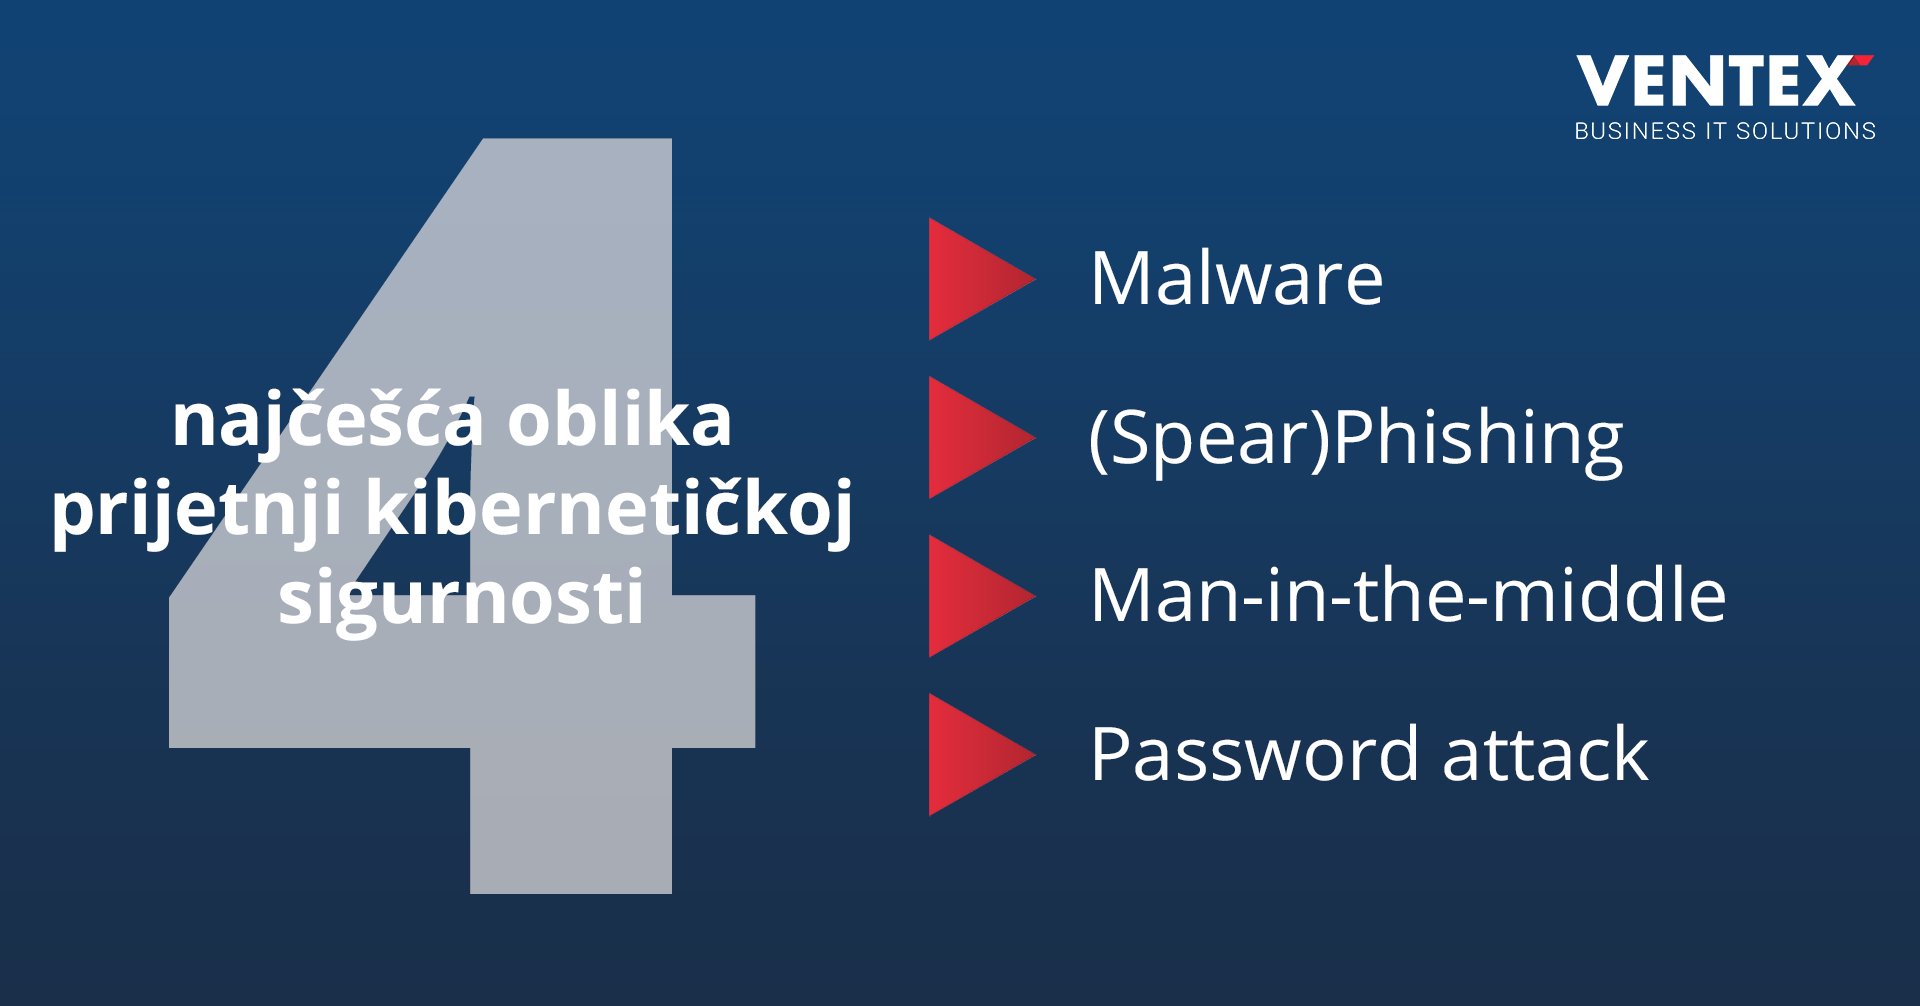 Četiri najčešća oblika prijetnji kibernetičkoj sigurnosti: Malware, (Spear)Phishing, Man-in-the-middle i Password attack